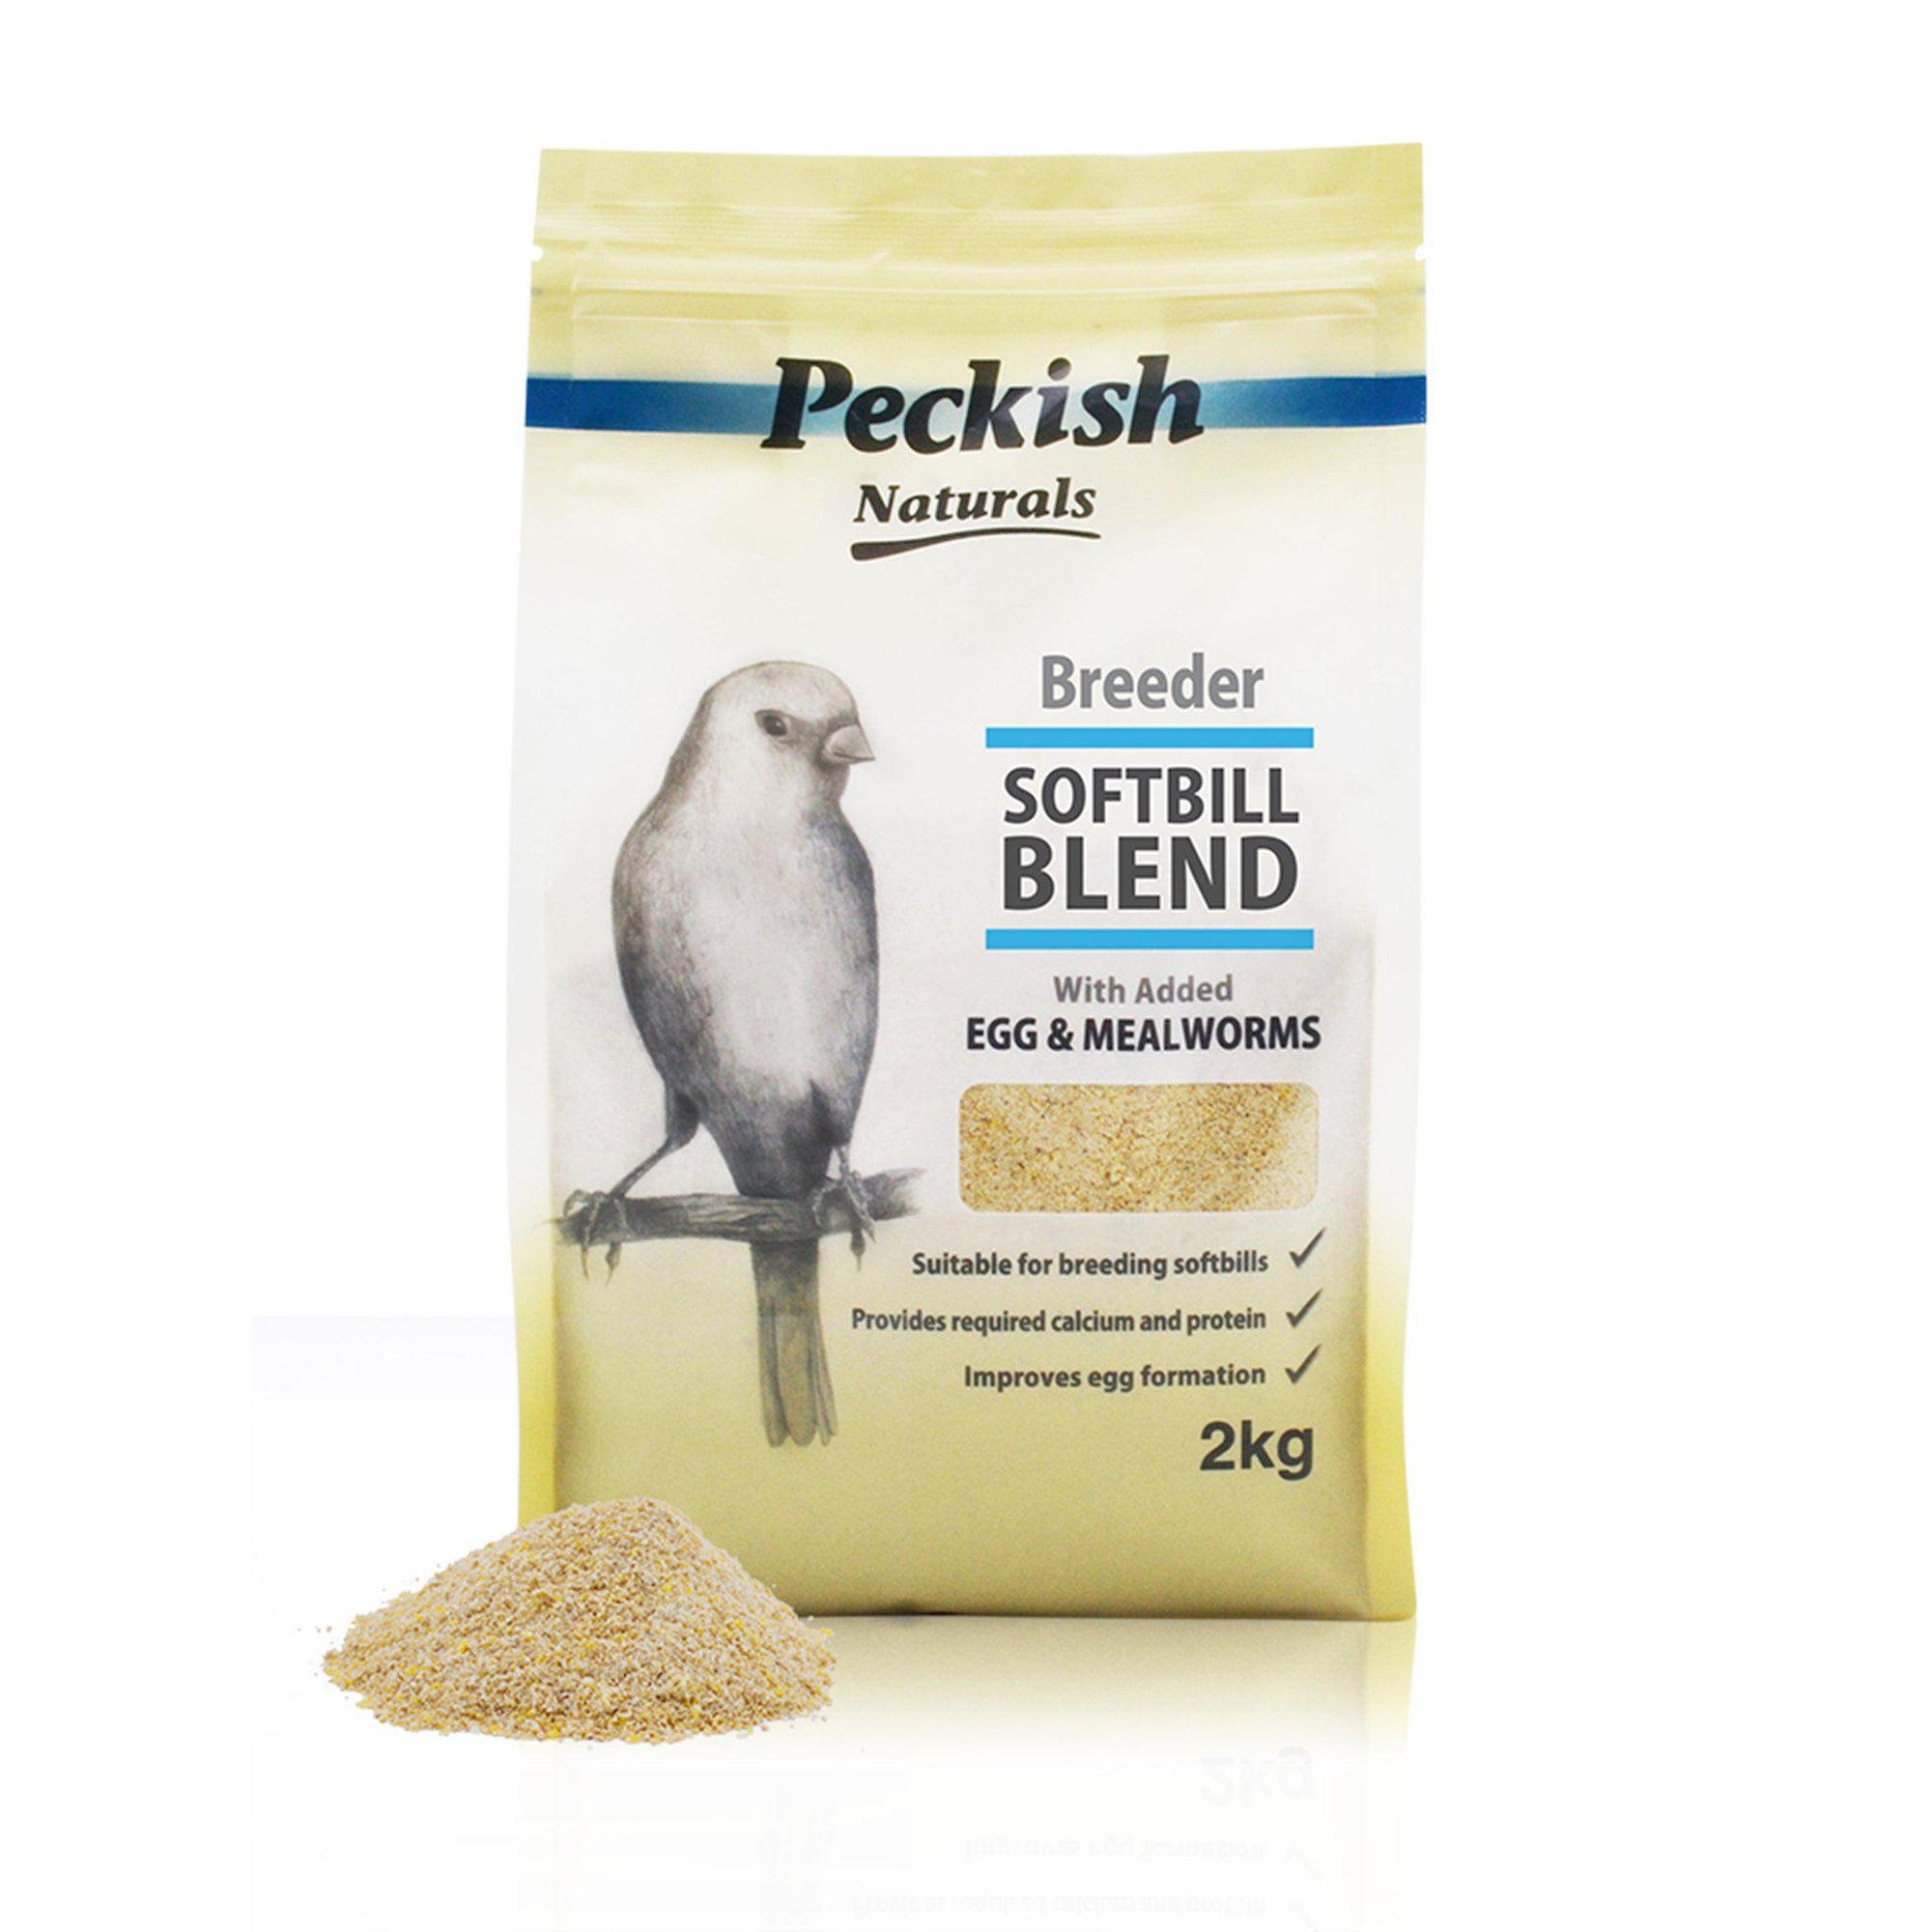 Peckish Naturals Breeder Softbill Blend - Egg & Mealworm - ComfyPet Products